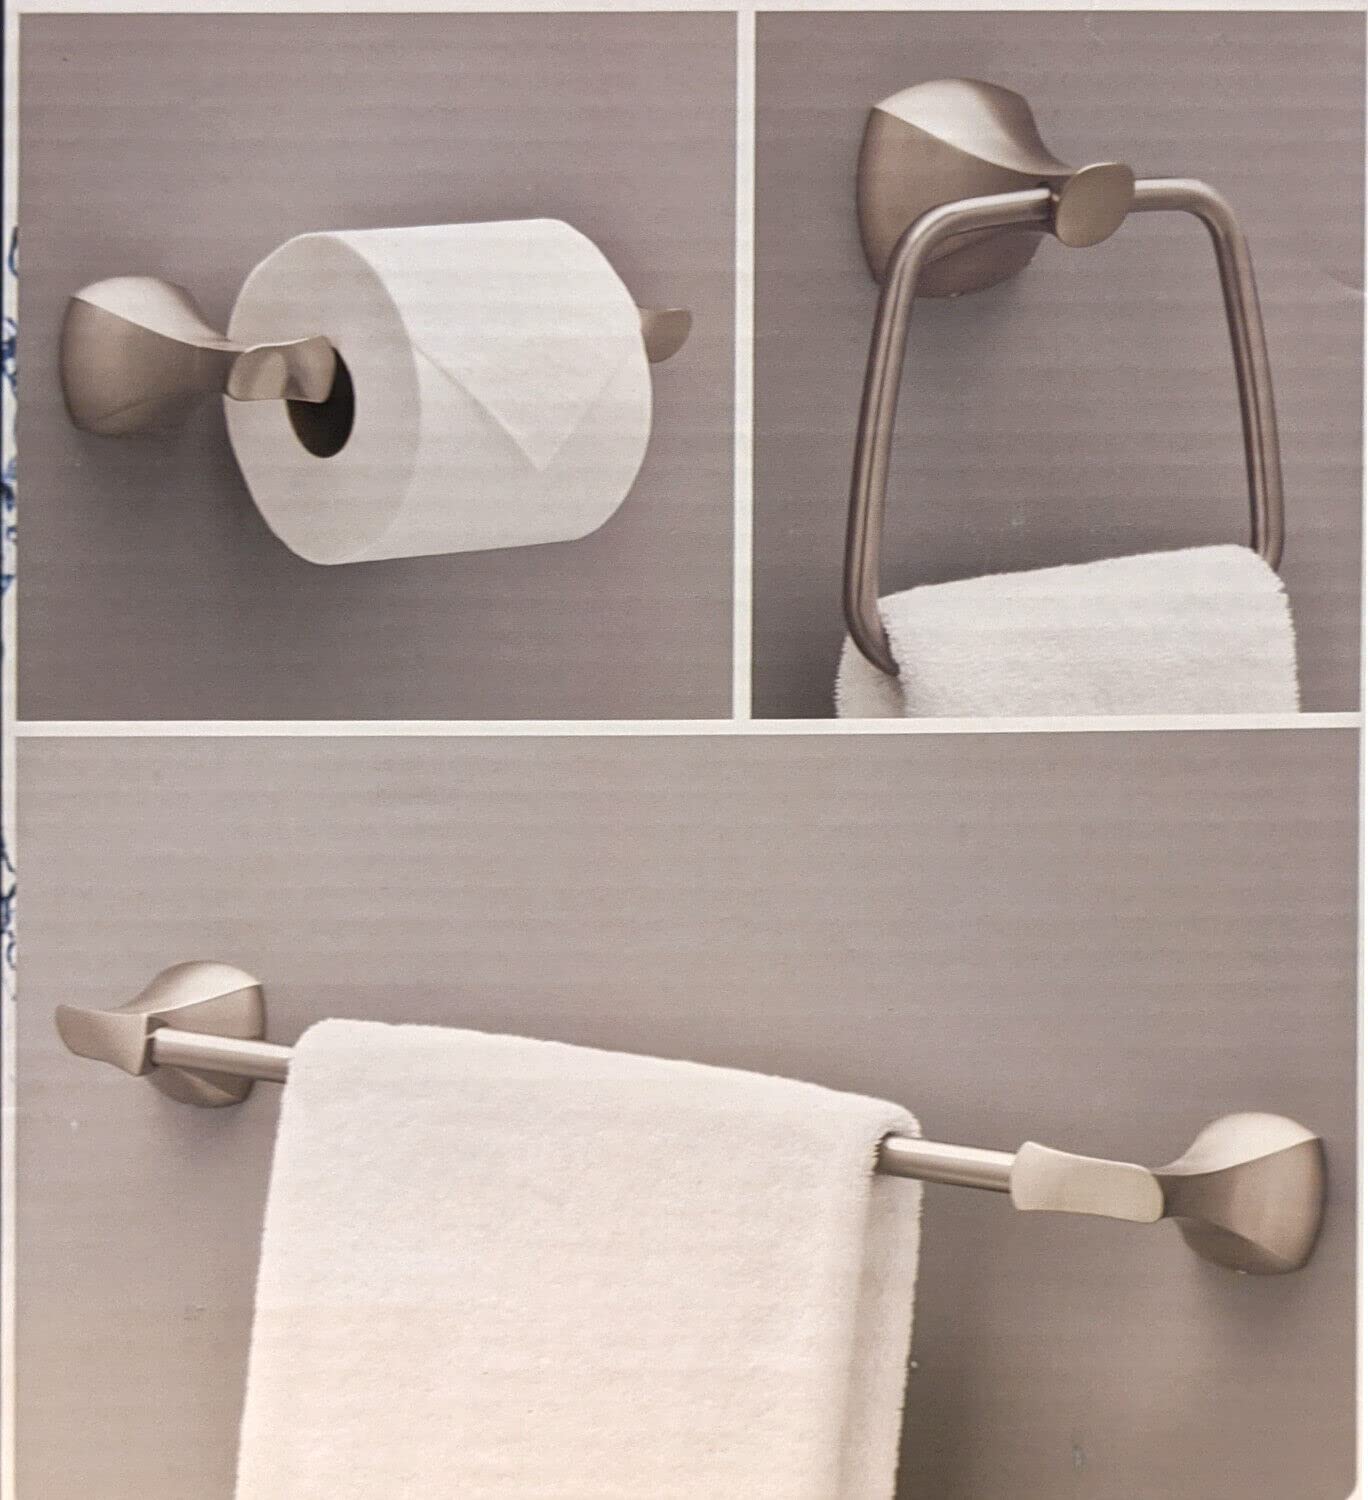 3-Piece Sandover Brushed Nickel Bathroom Set,Towel Ring, Towel bar, Toilet Paper